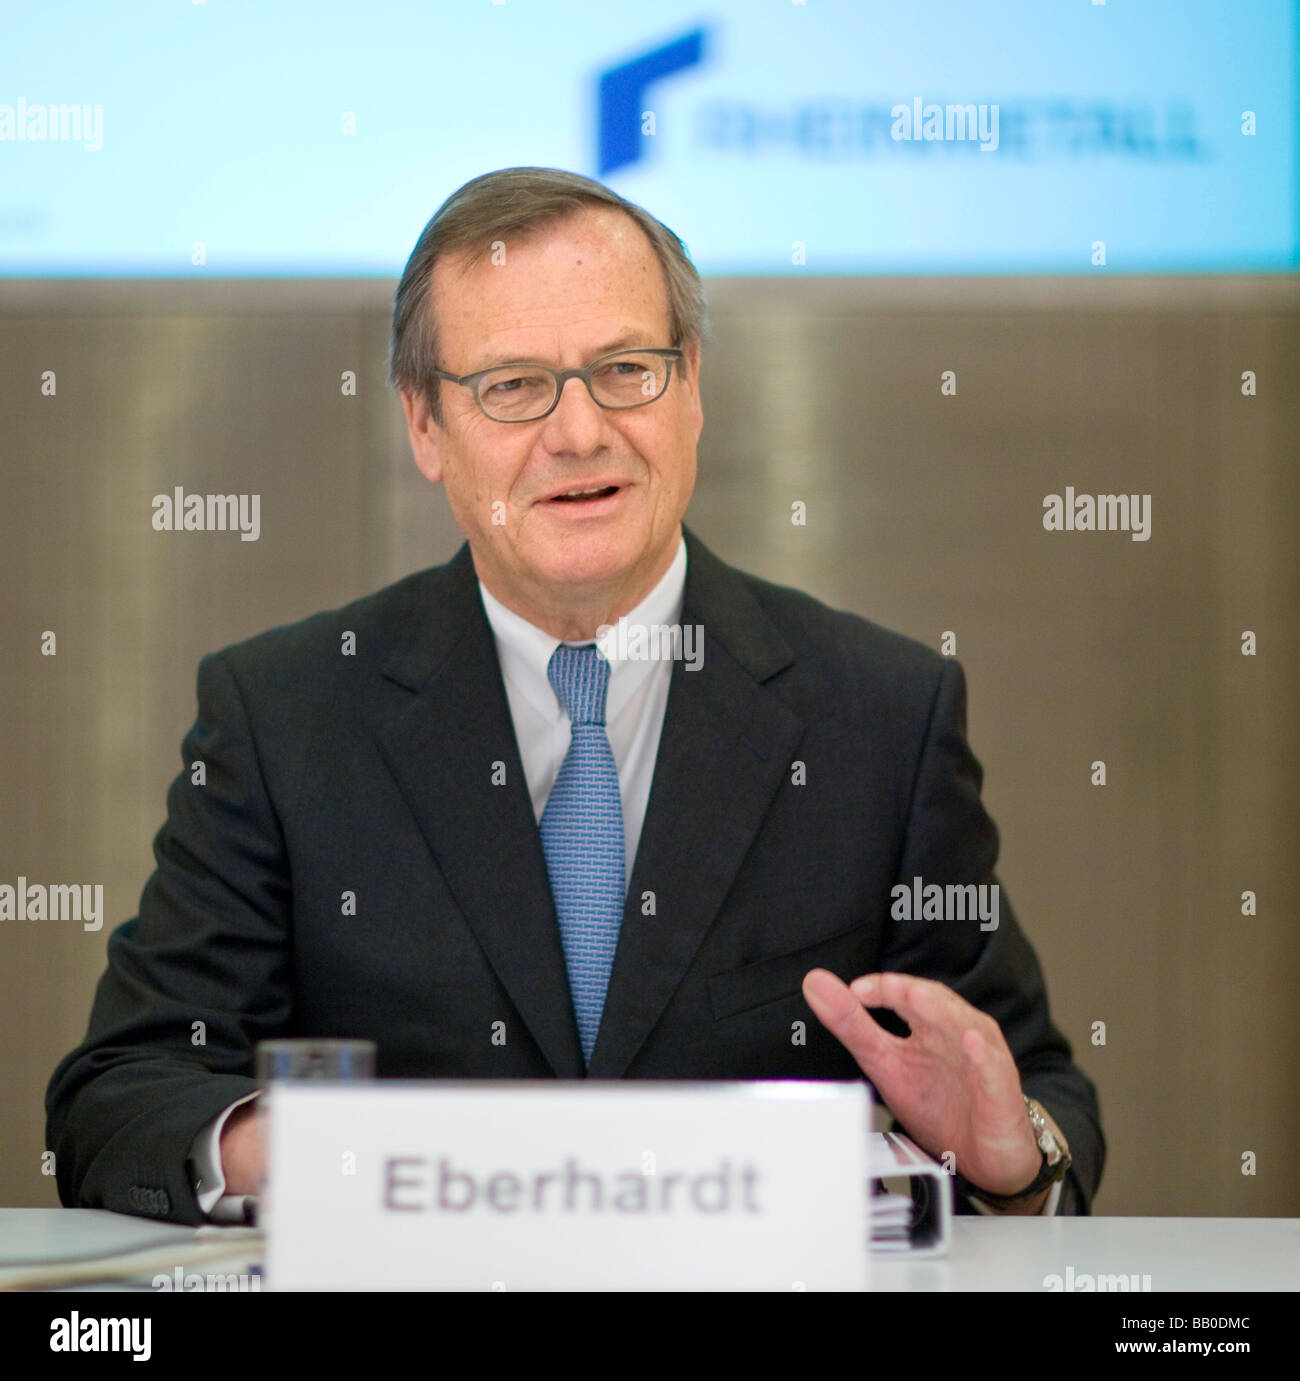 EBERHARDT CEO of Rheinmetall AG Stock Photo - Alamy